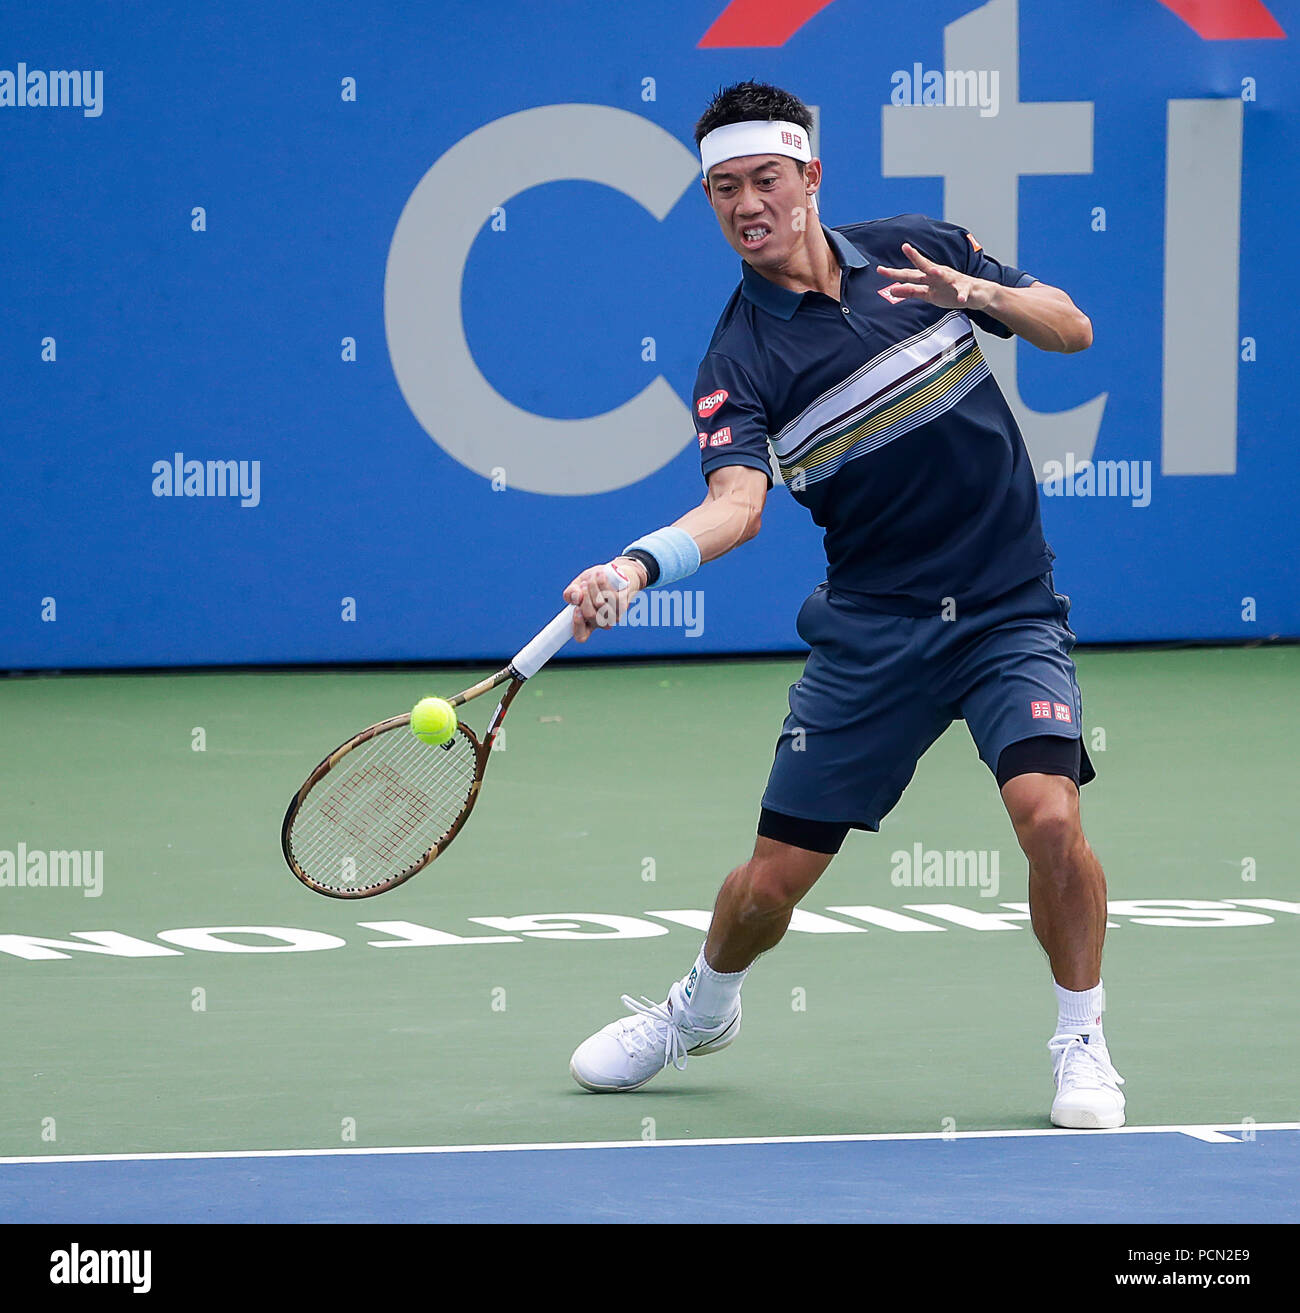 Washington DC, USA, 3 Aug 2018. August 3, 2018: Kei Nishikori plays a  forehand shot during a Citi Open tennis match at Rock Creek Park in  Washington DC. Justin Cooper/CSM Stock Photo - Alamy